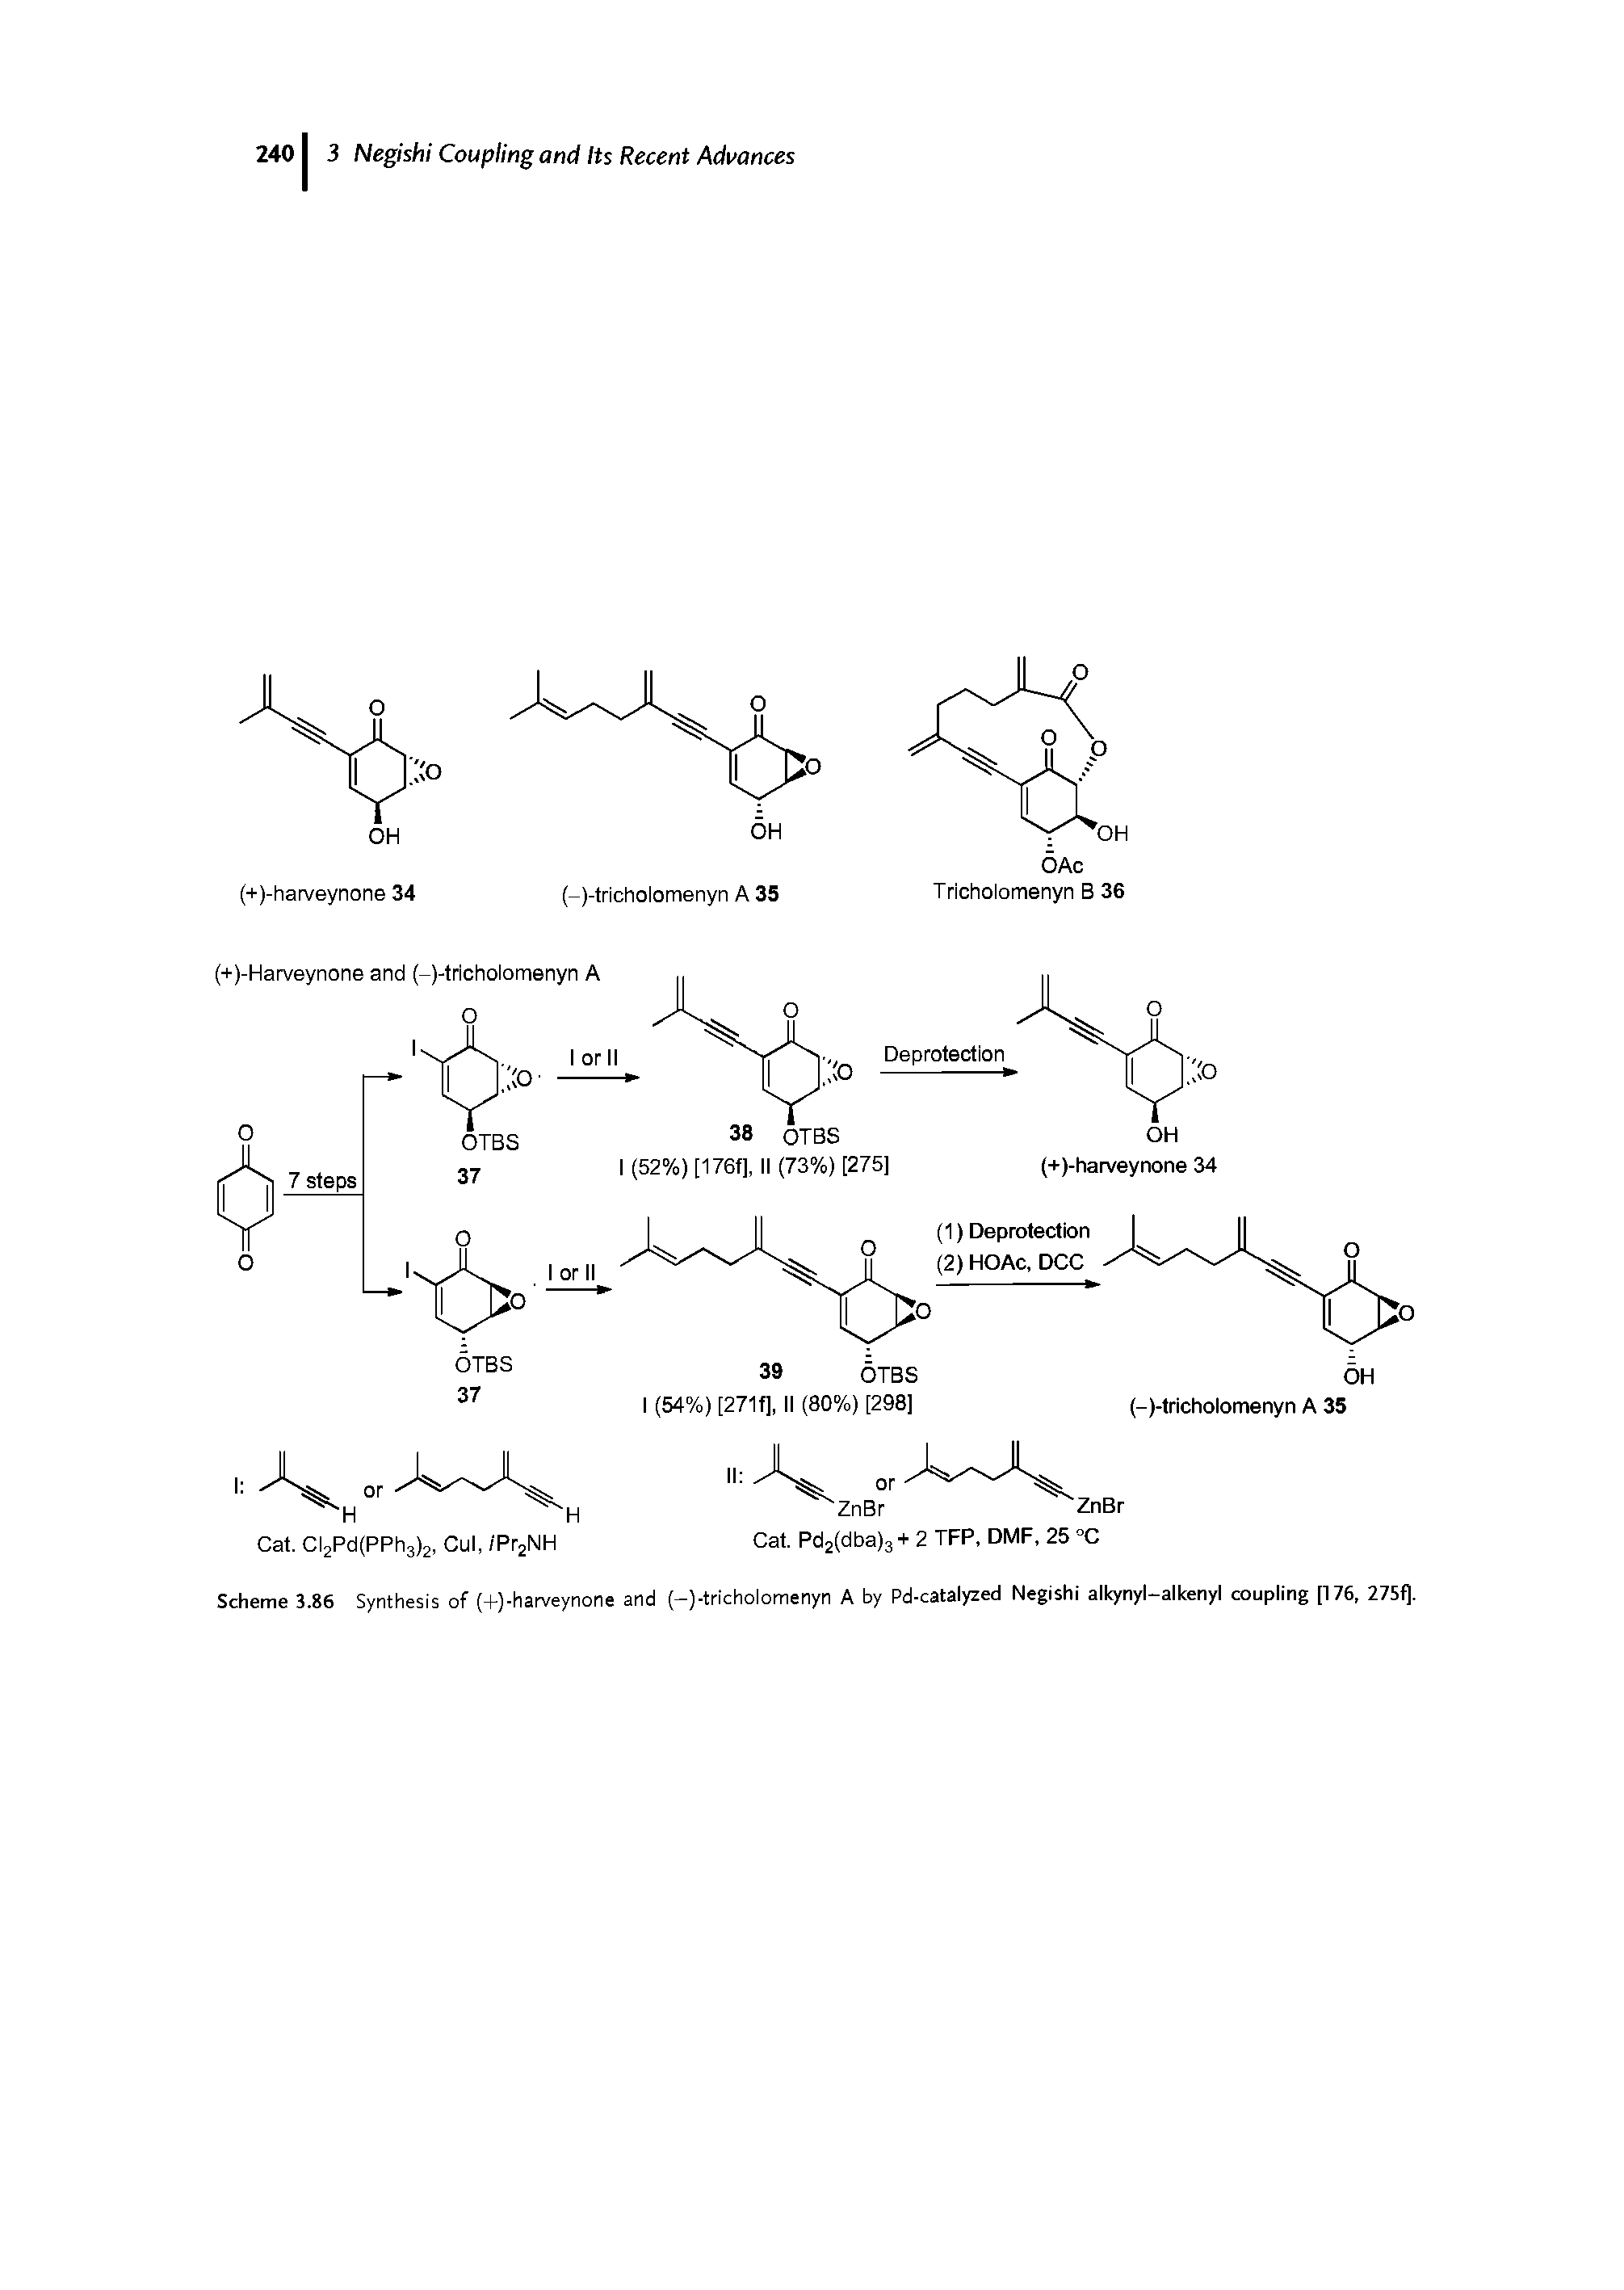 Scheme 3.86 Synthesis of (+)-harveynone and (-)-tricholomenyn A by Pd-catalyzed Negishi alkynyl-alkenyl coupling [176, 275f].